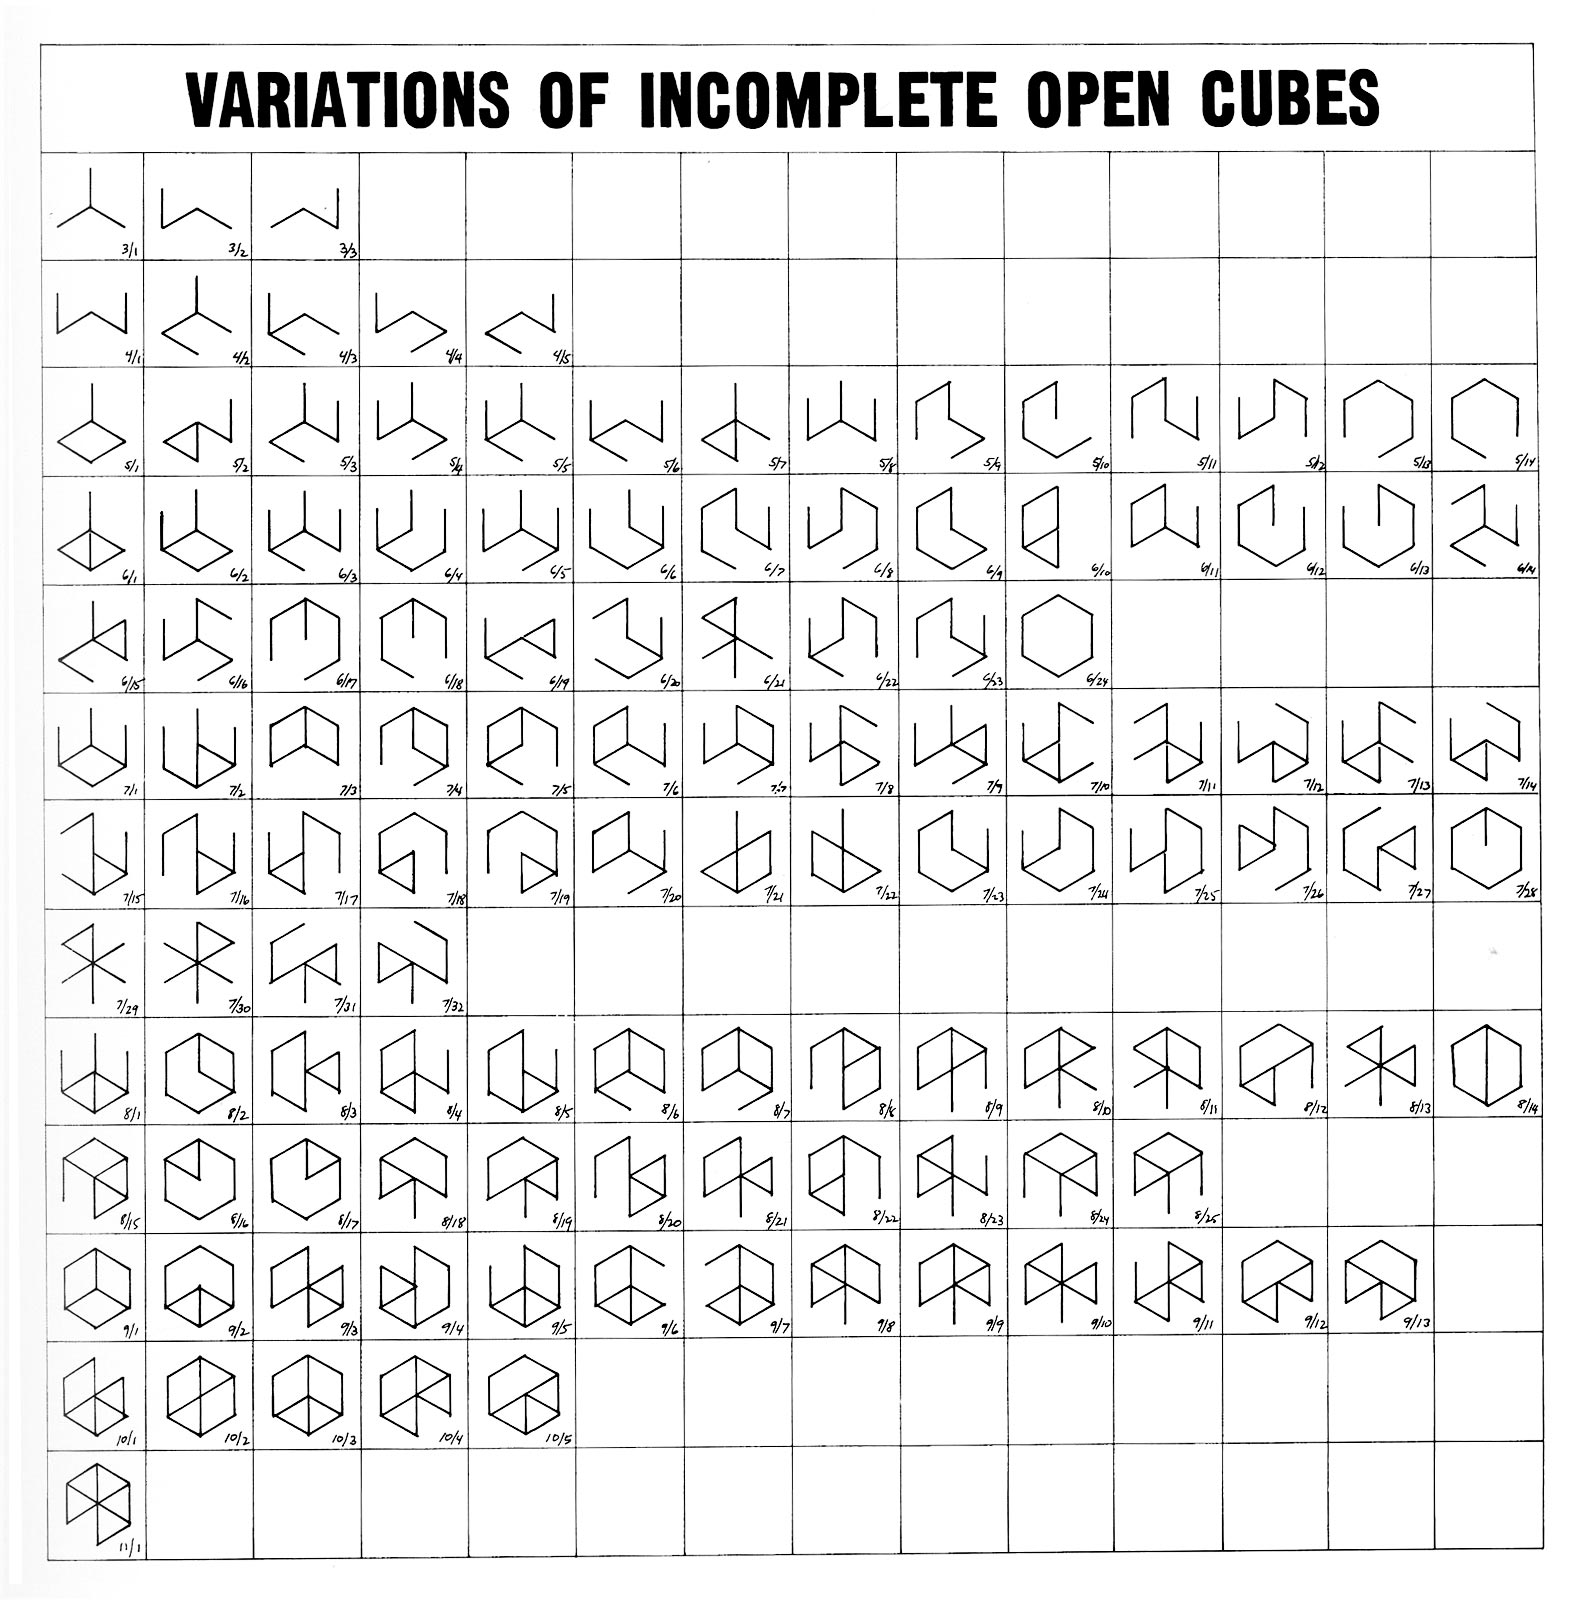 le-witt-incomplete-open-cubes-01